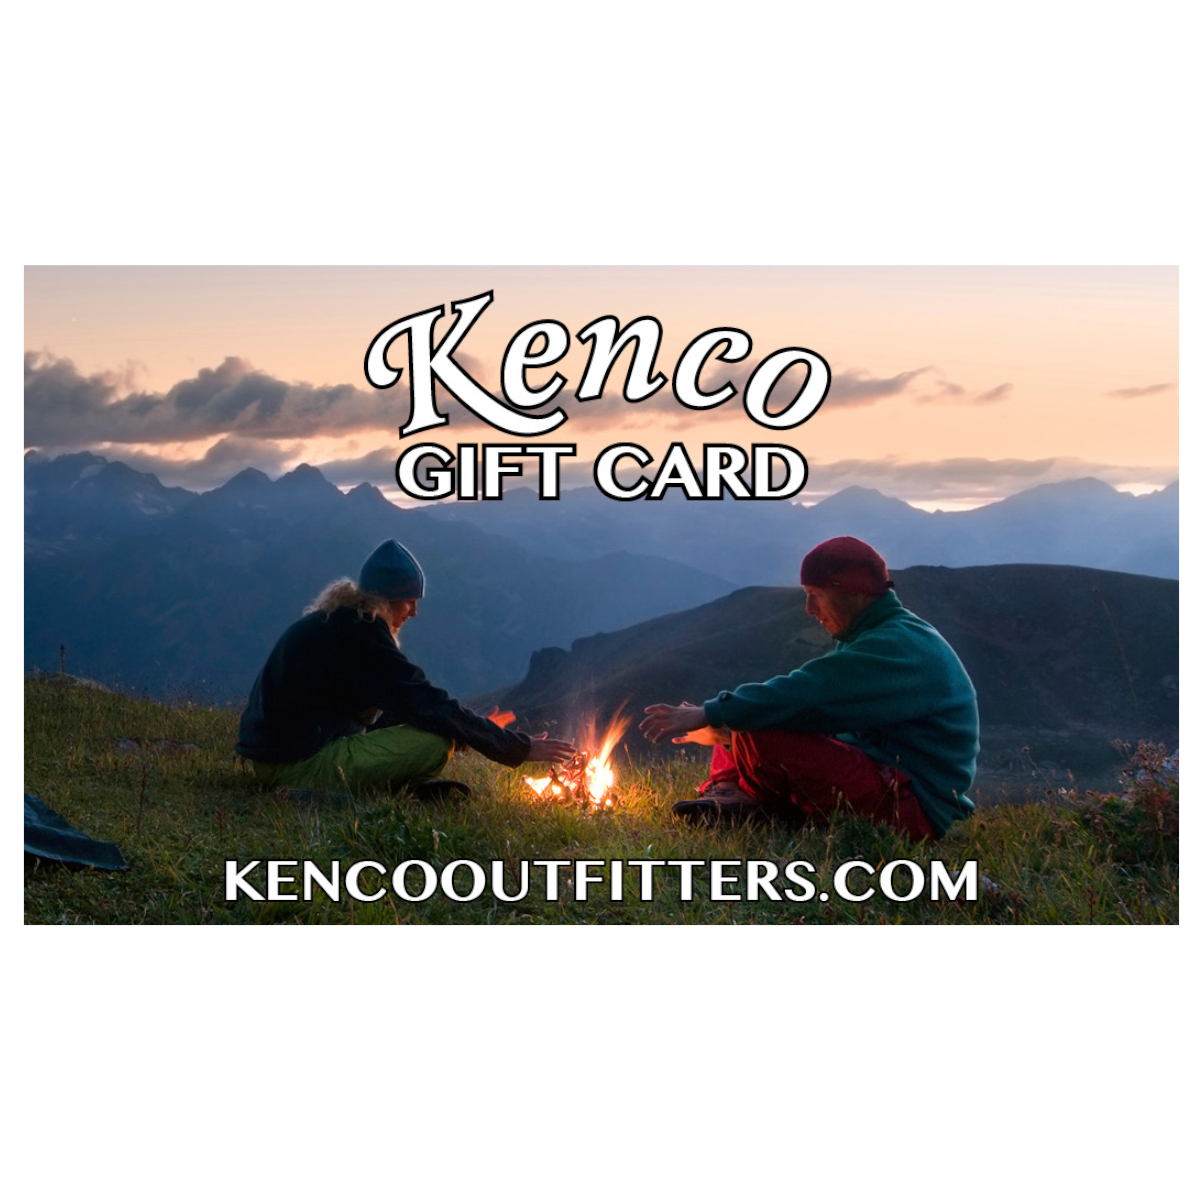 Kenco Gift Card image